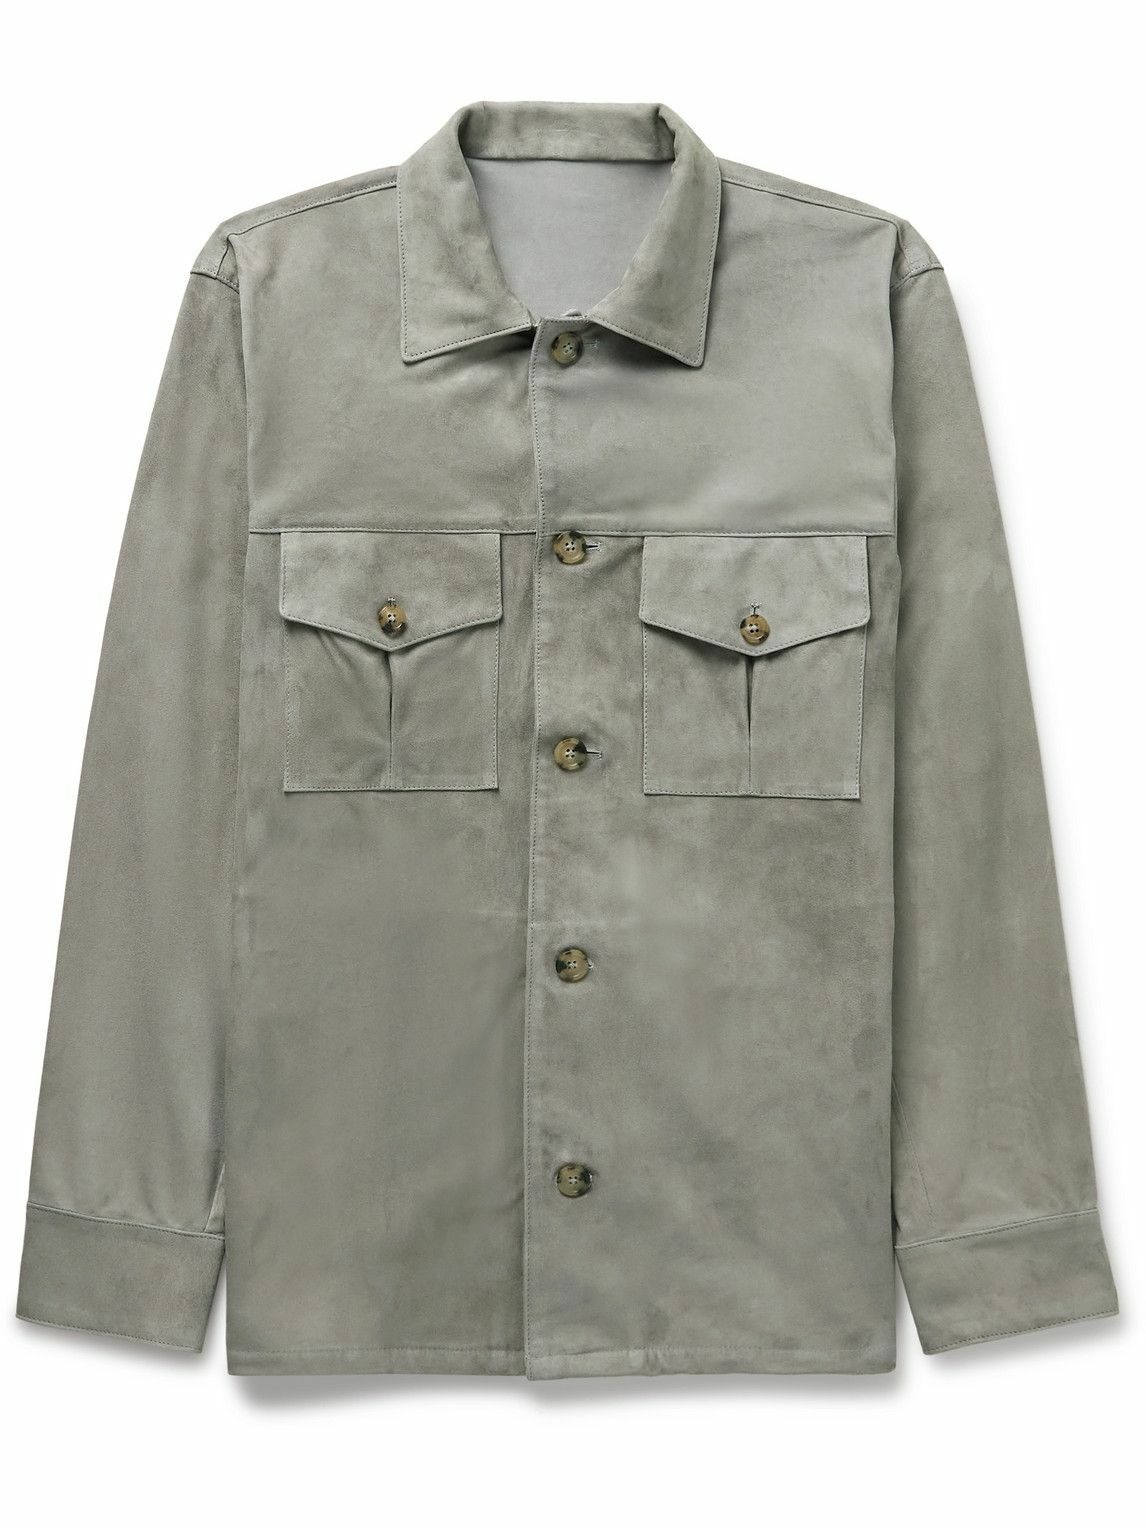 Stòffa - Suede Shirt Jacket - Gray STÒFFA